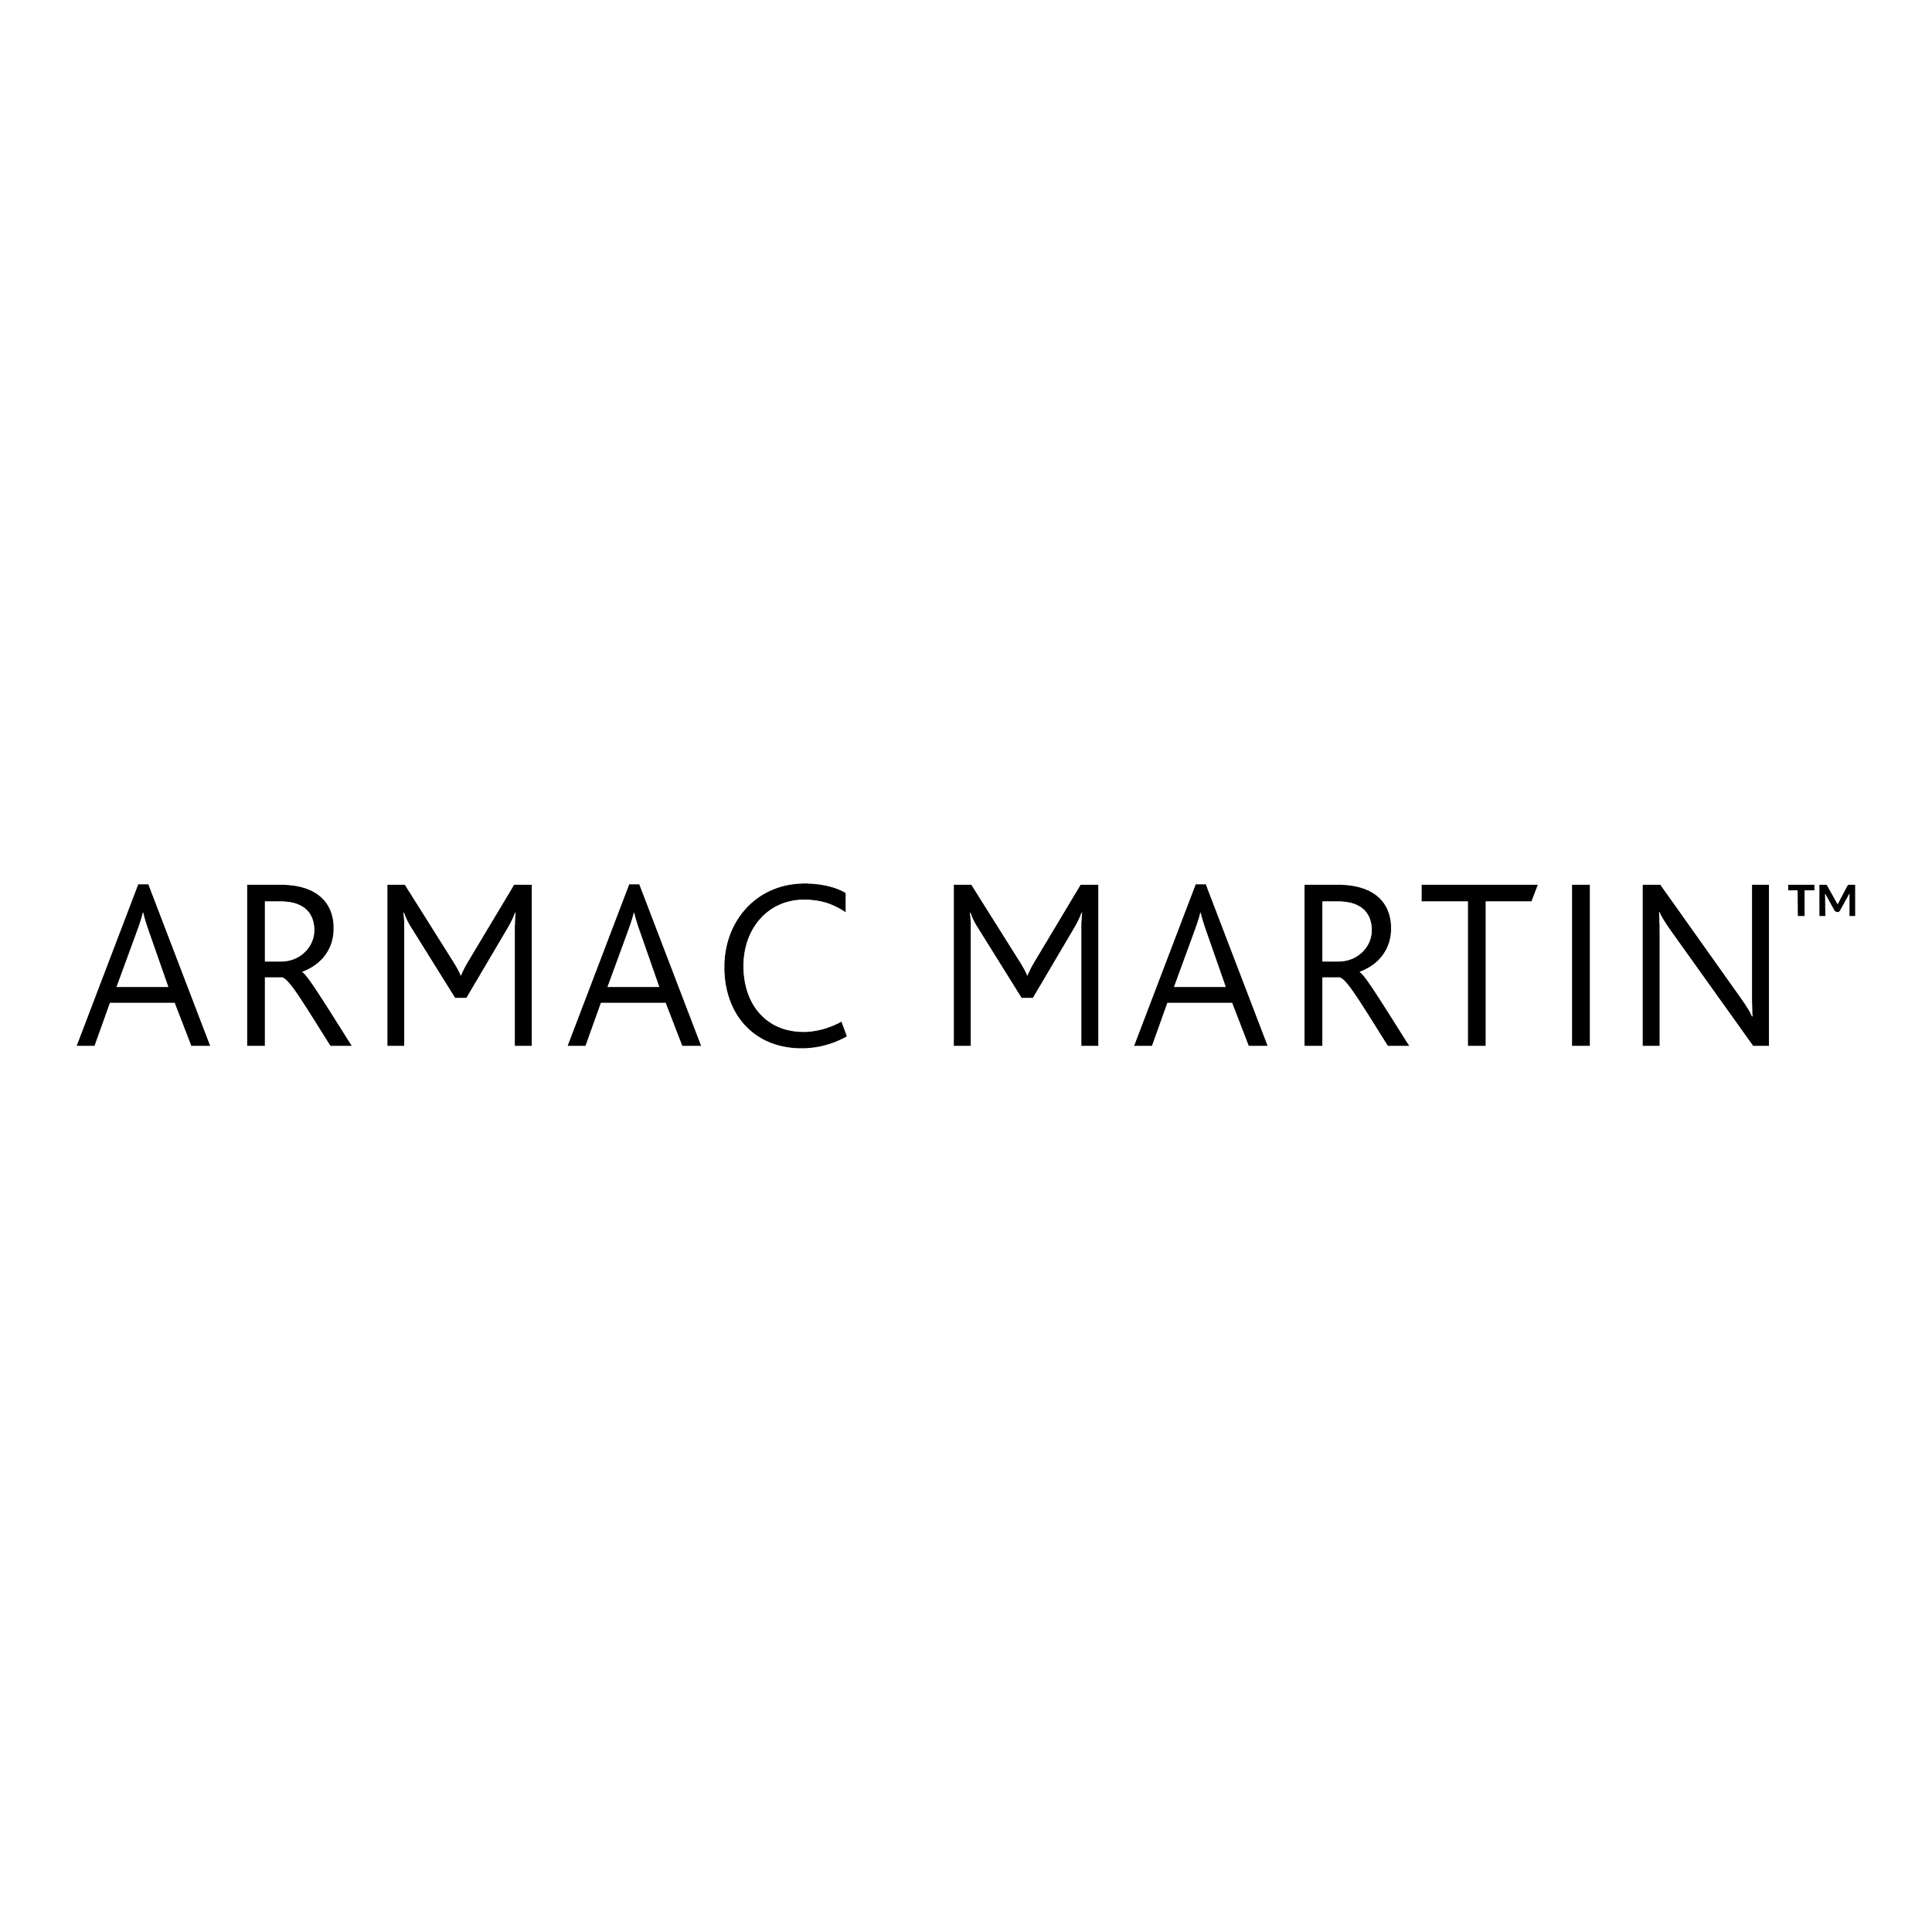 Armac Martin Black Wordmark Logo.png